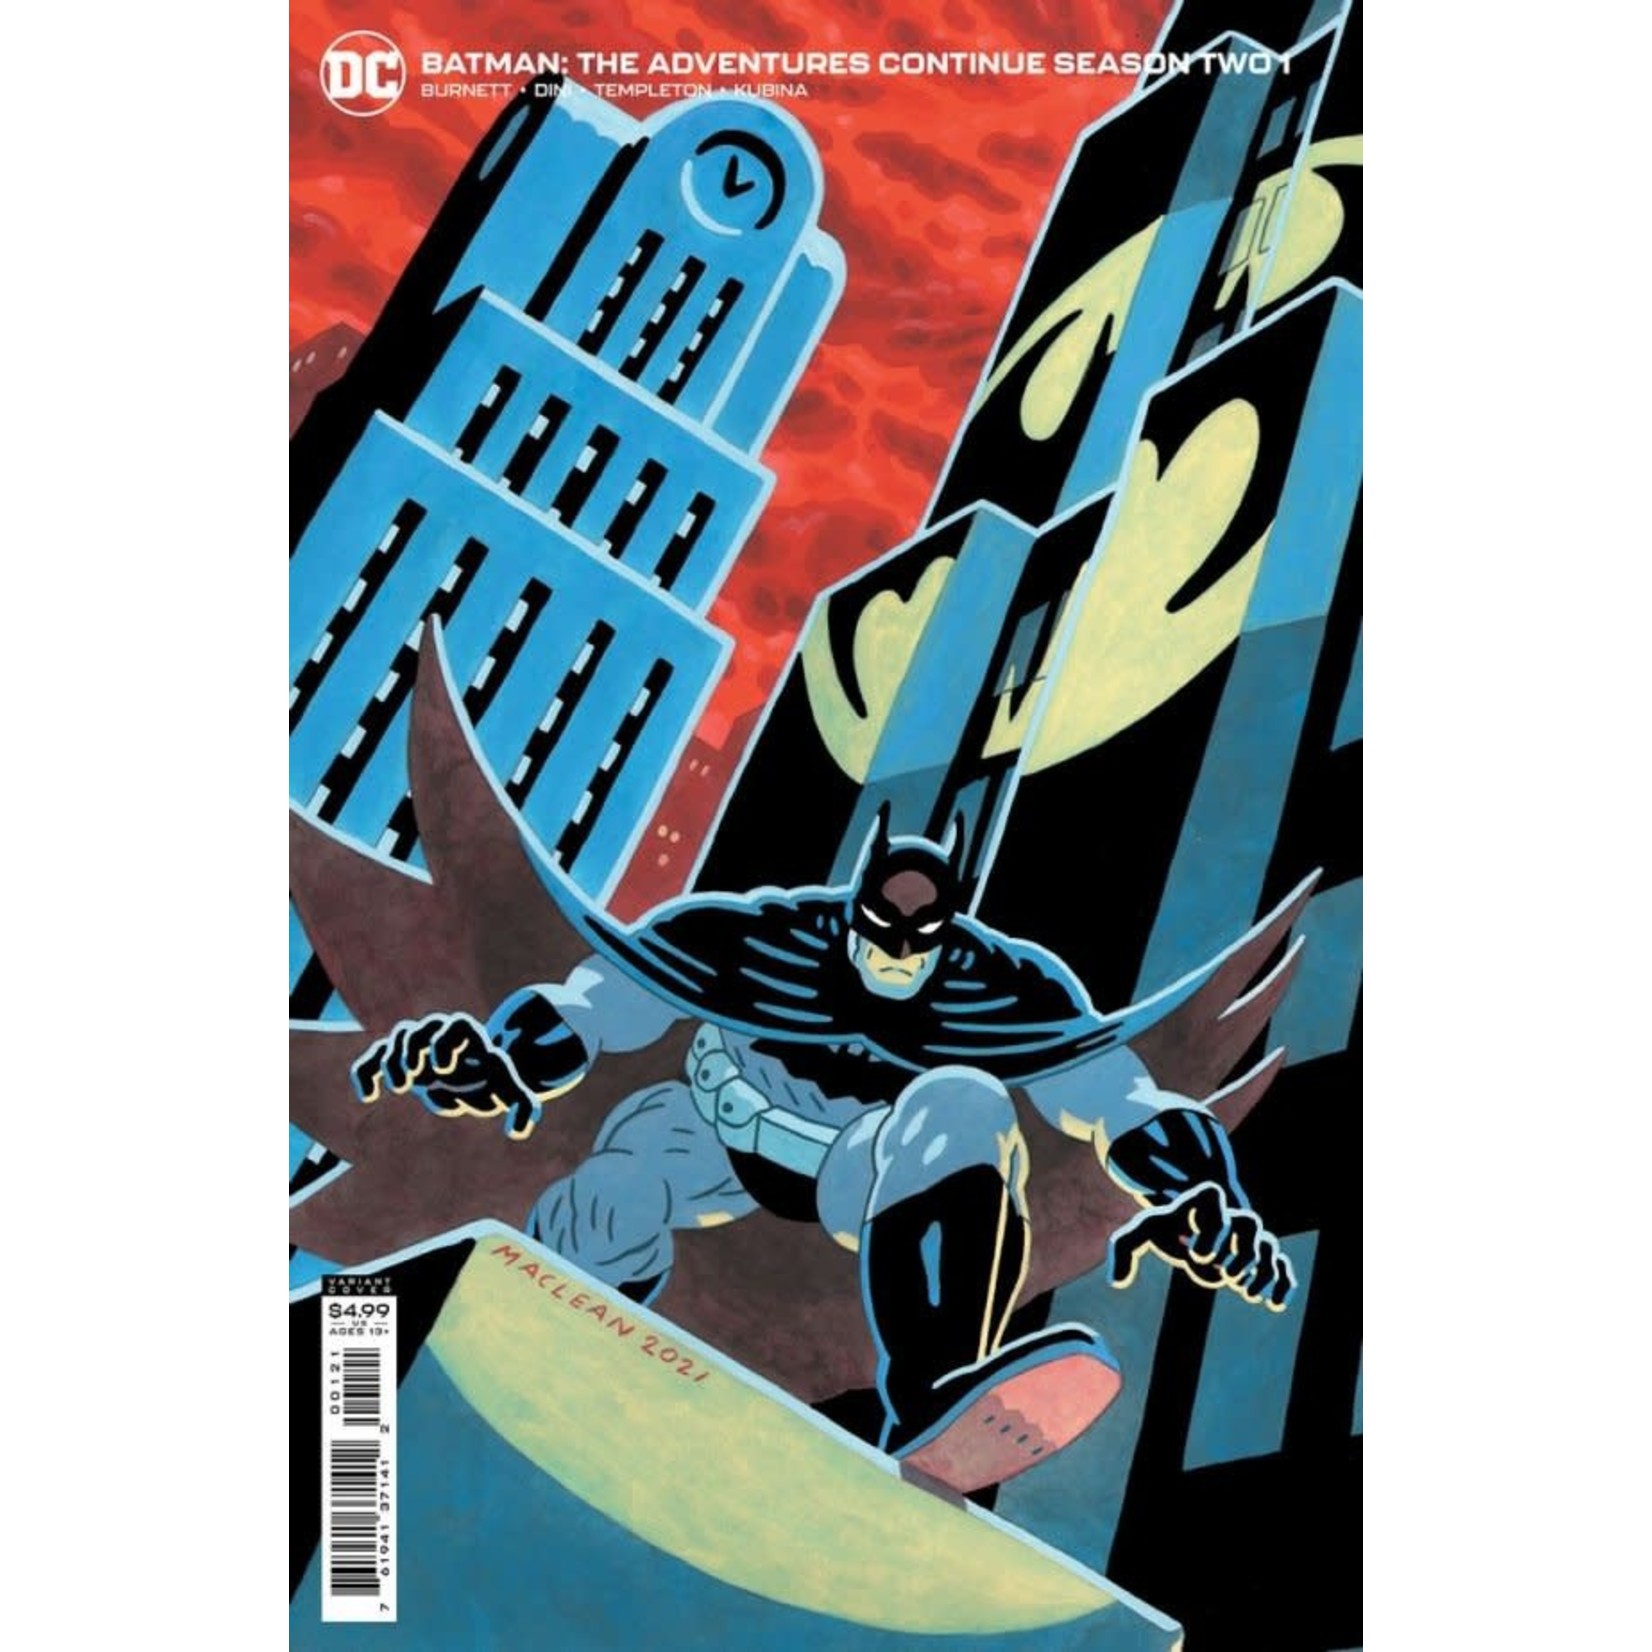 DC Comics Batman: The Adventures Continue Season Two #1 1:25 MacLean Variant